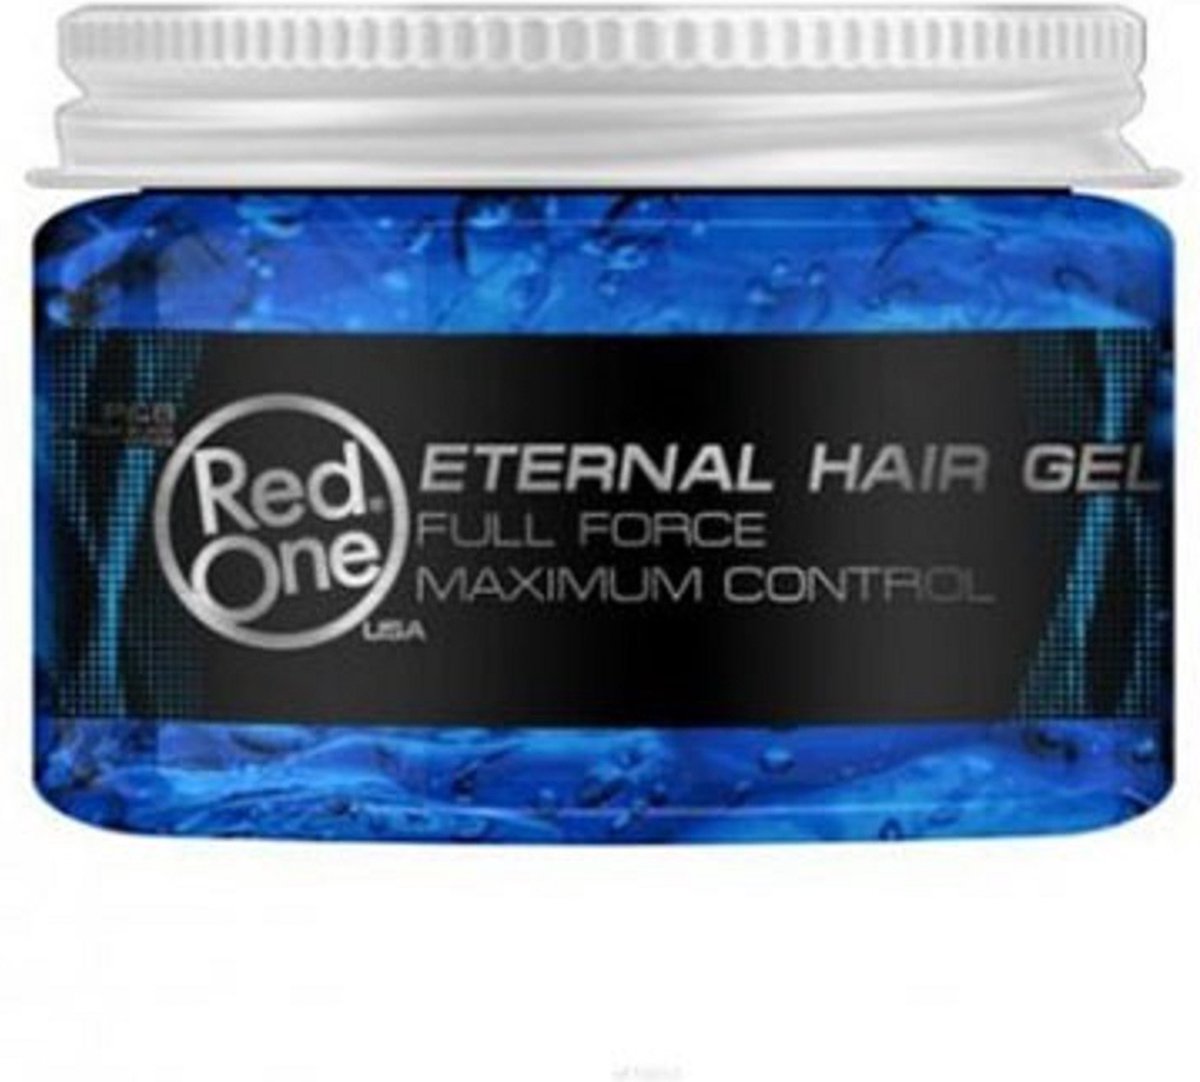 Red One Maximum Control Eternal Hair Gel Full Force 100ml